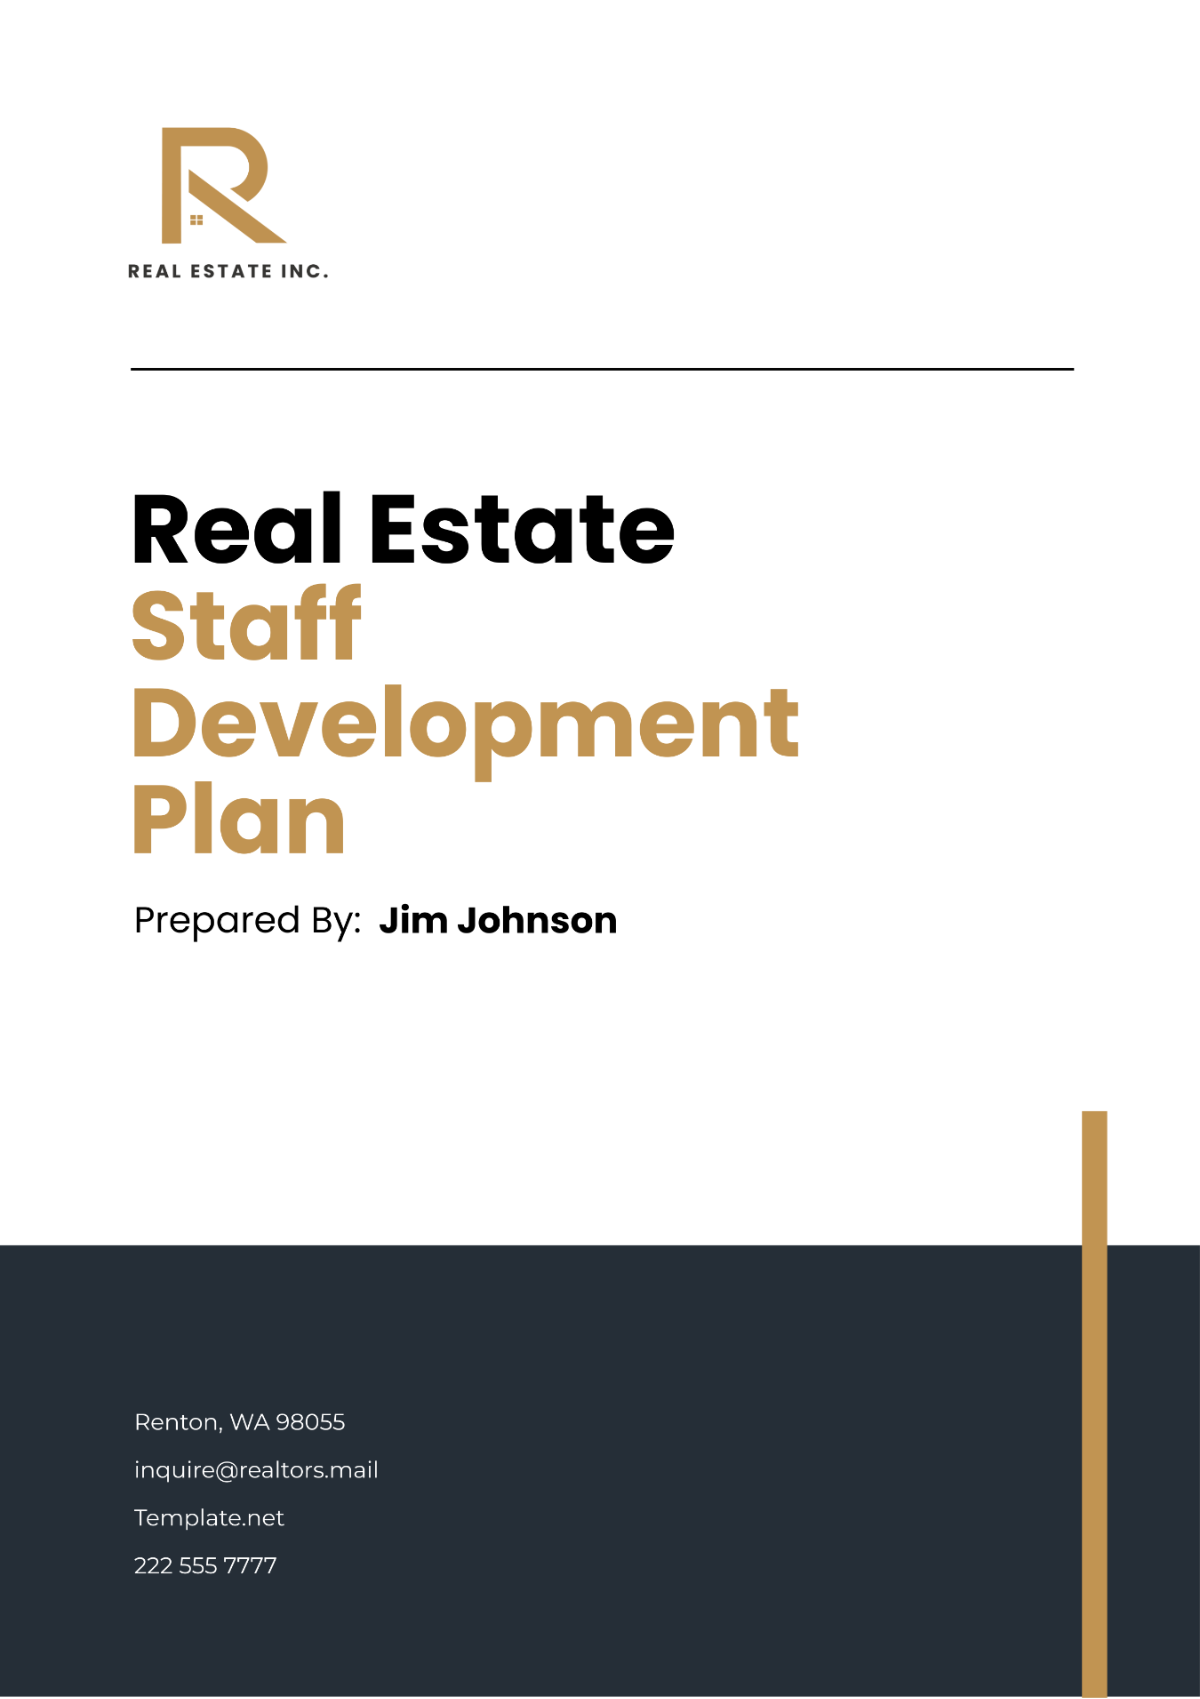 Real Estate Staff Development Plan Template